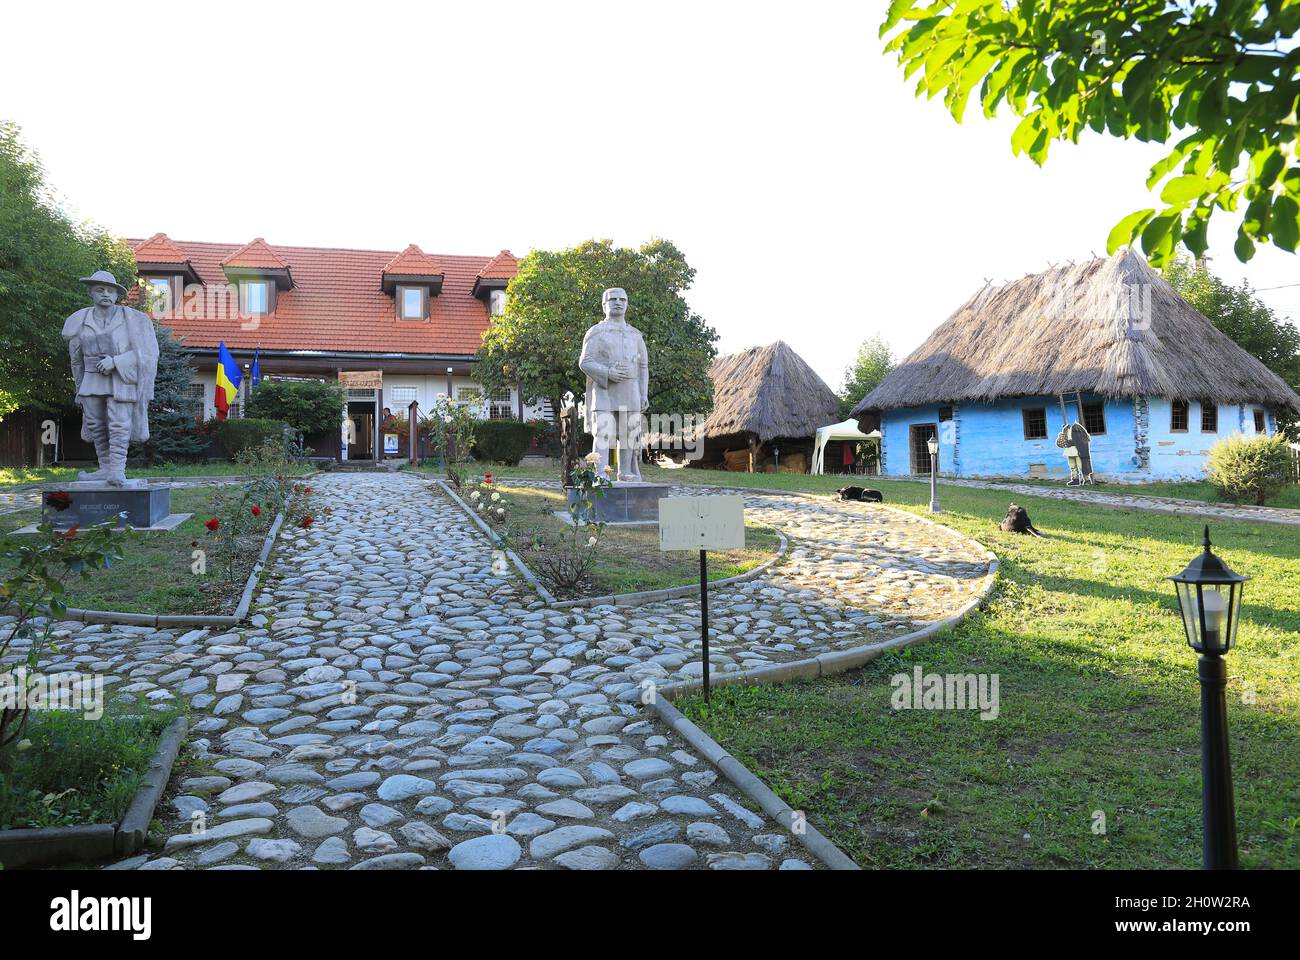 The Badea Cartan village museum in the village of Cartisoara, on Transfagarasan, in Transylvania, Romania Stock Photo